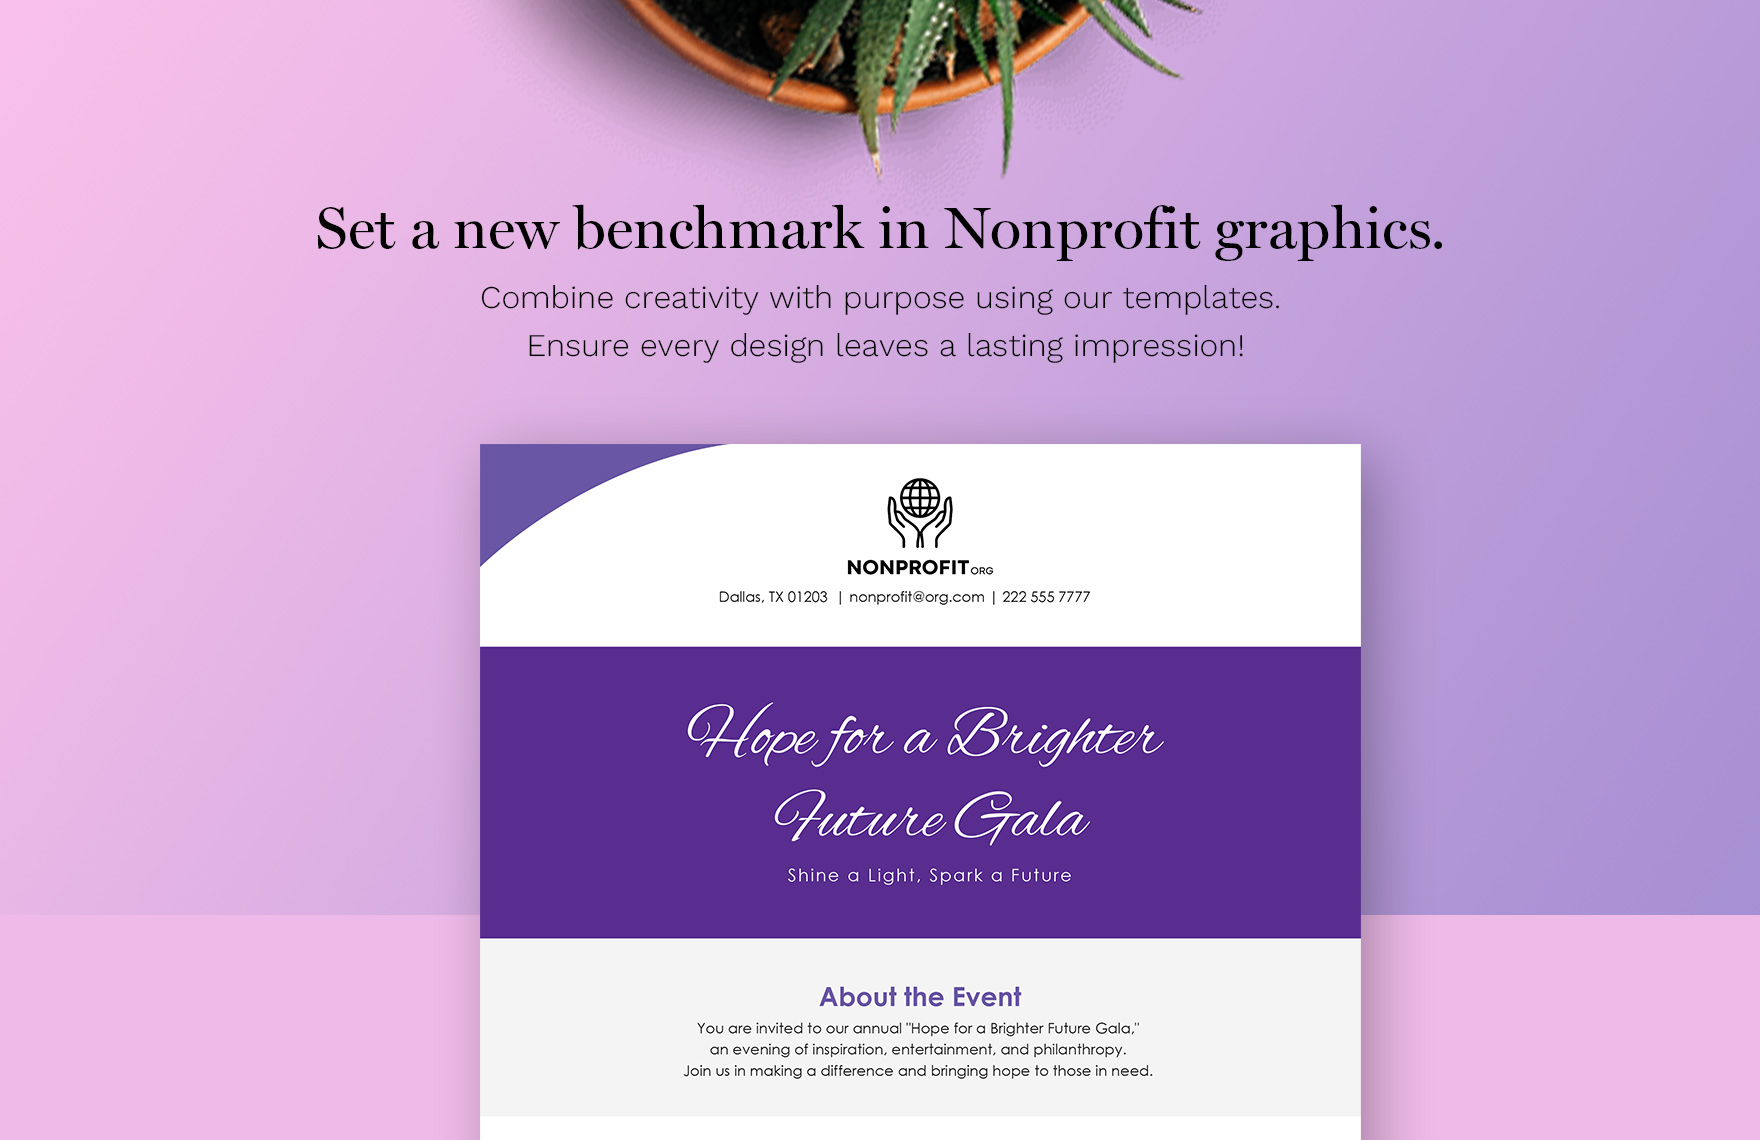 Nonprofit Organization Event Flyer Template